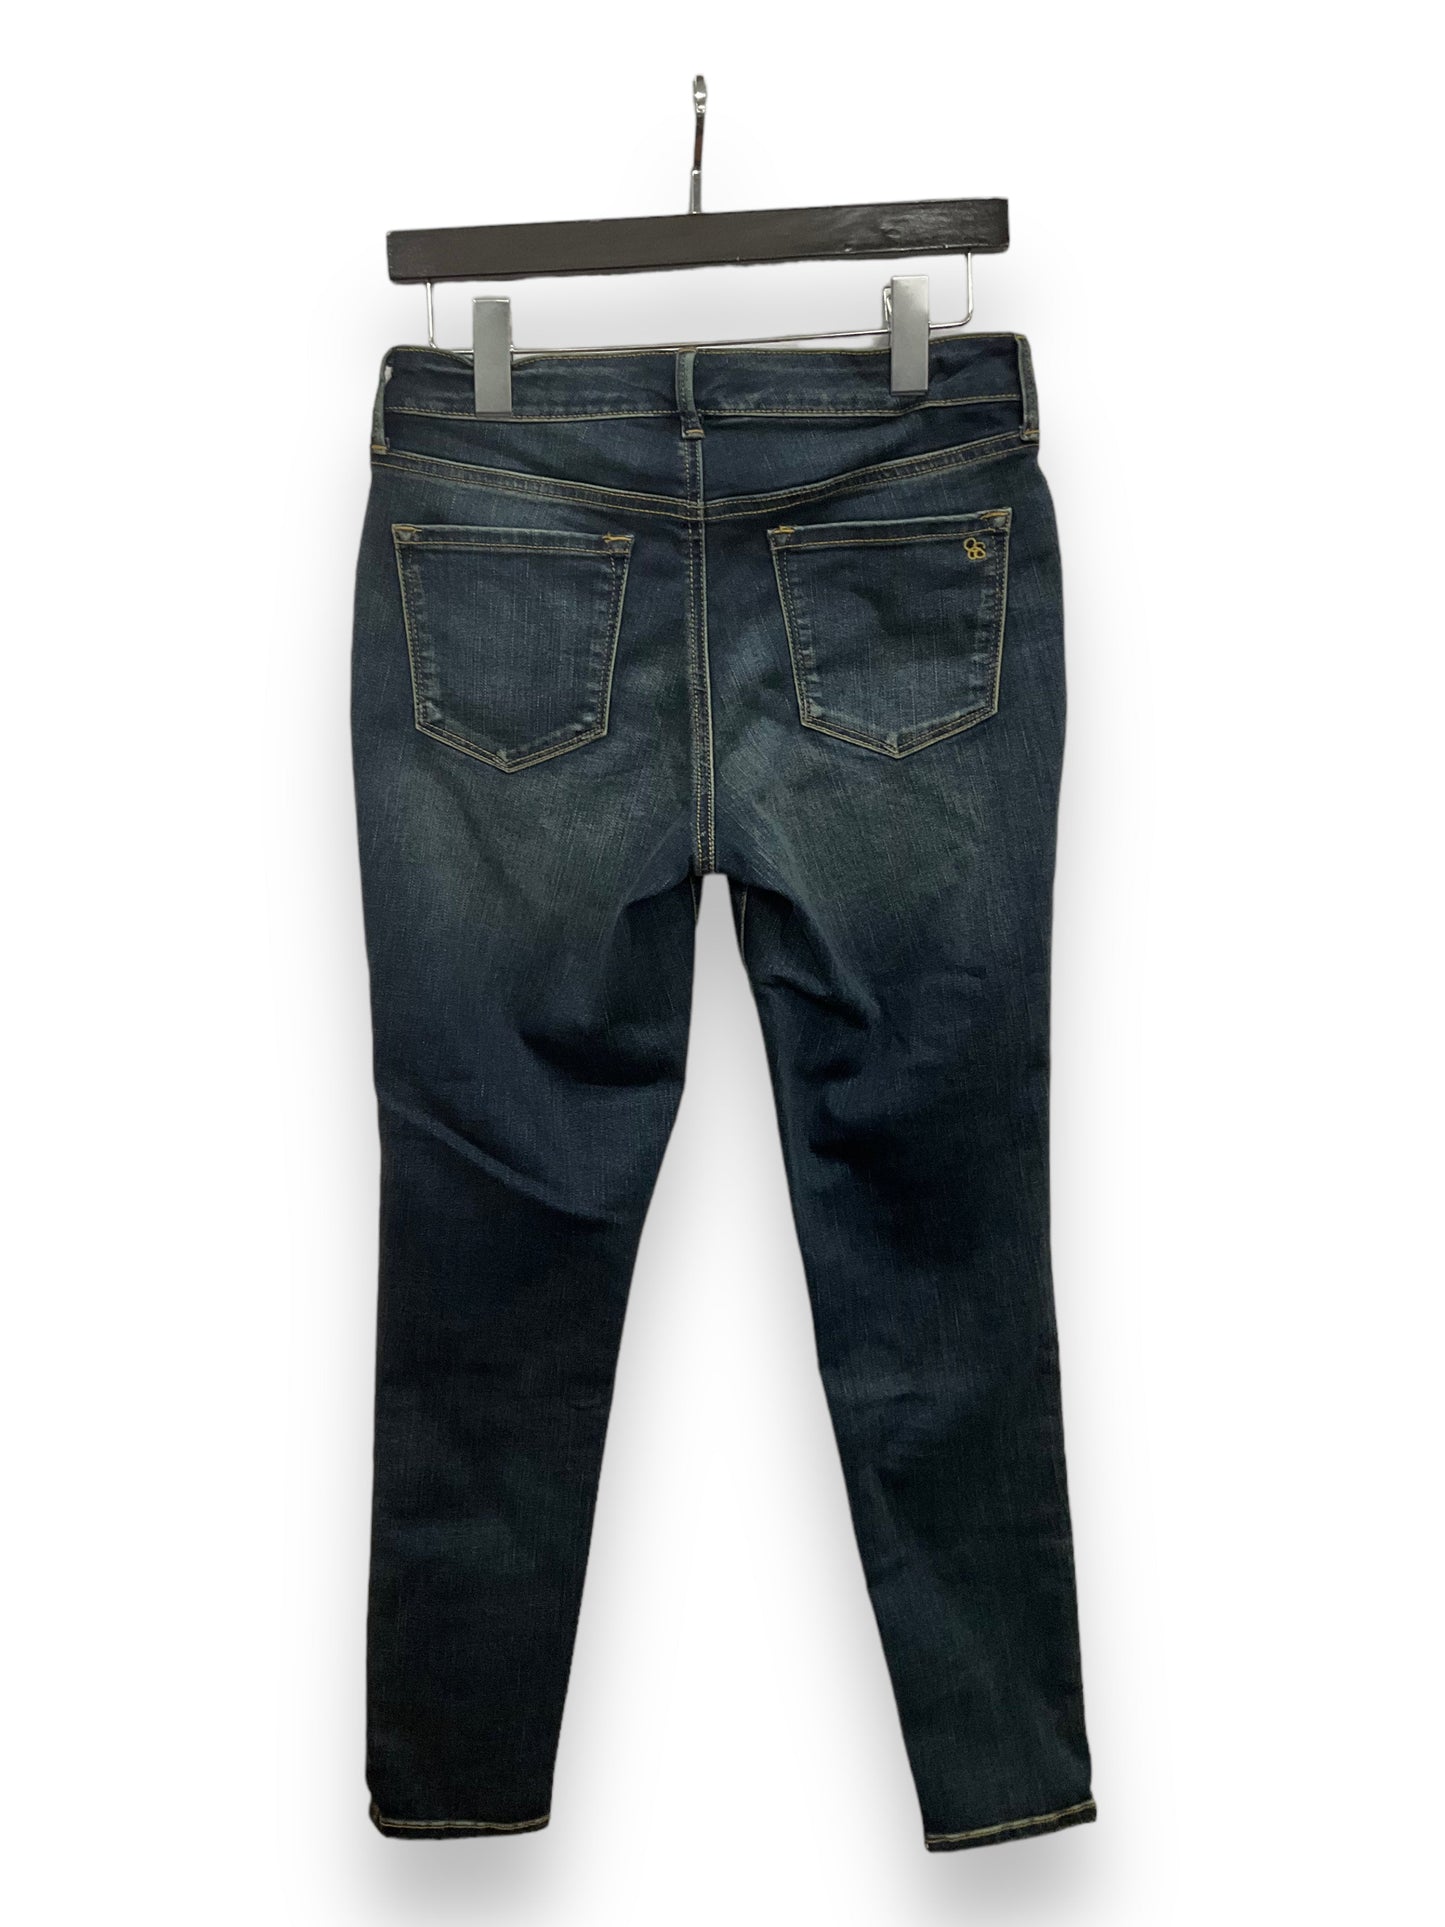 Jeans Skinny By Jessica Simpson  Size: 6